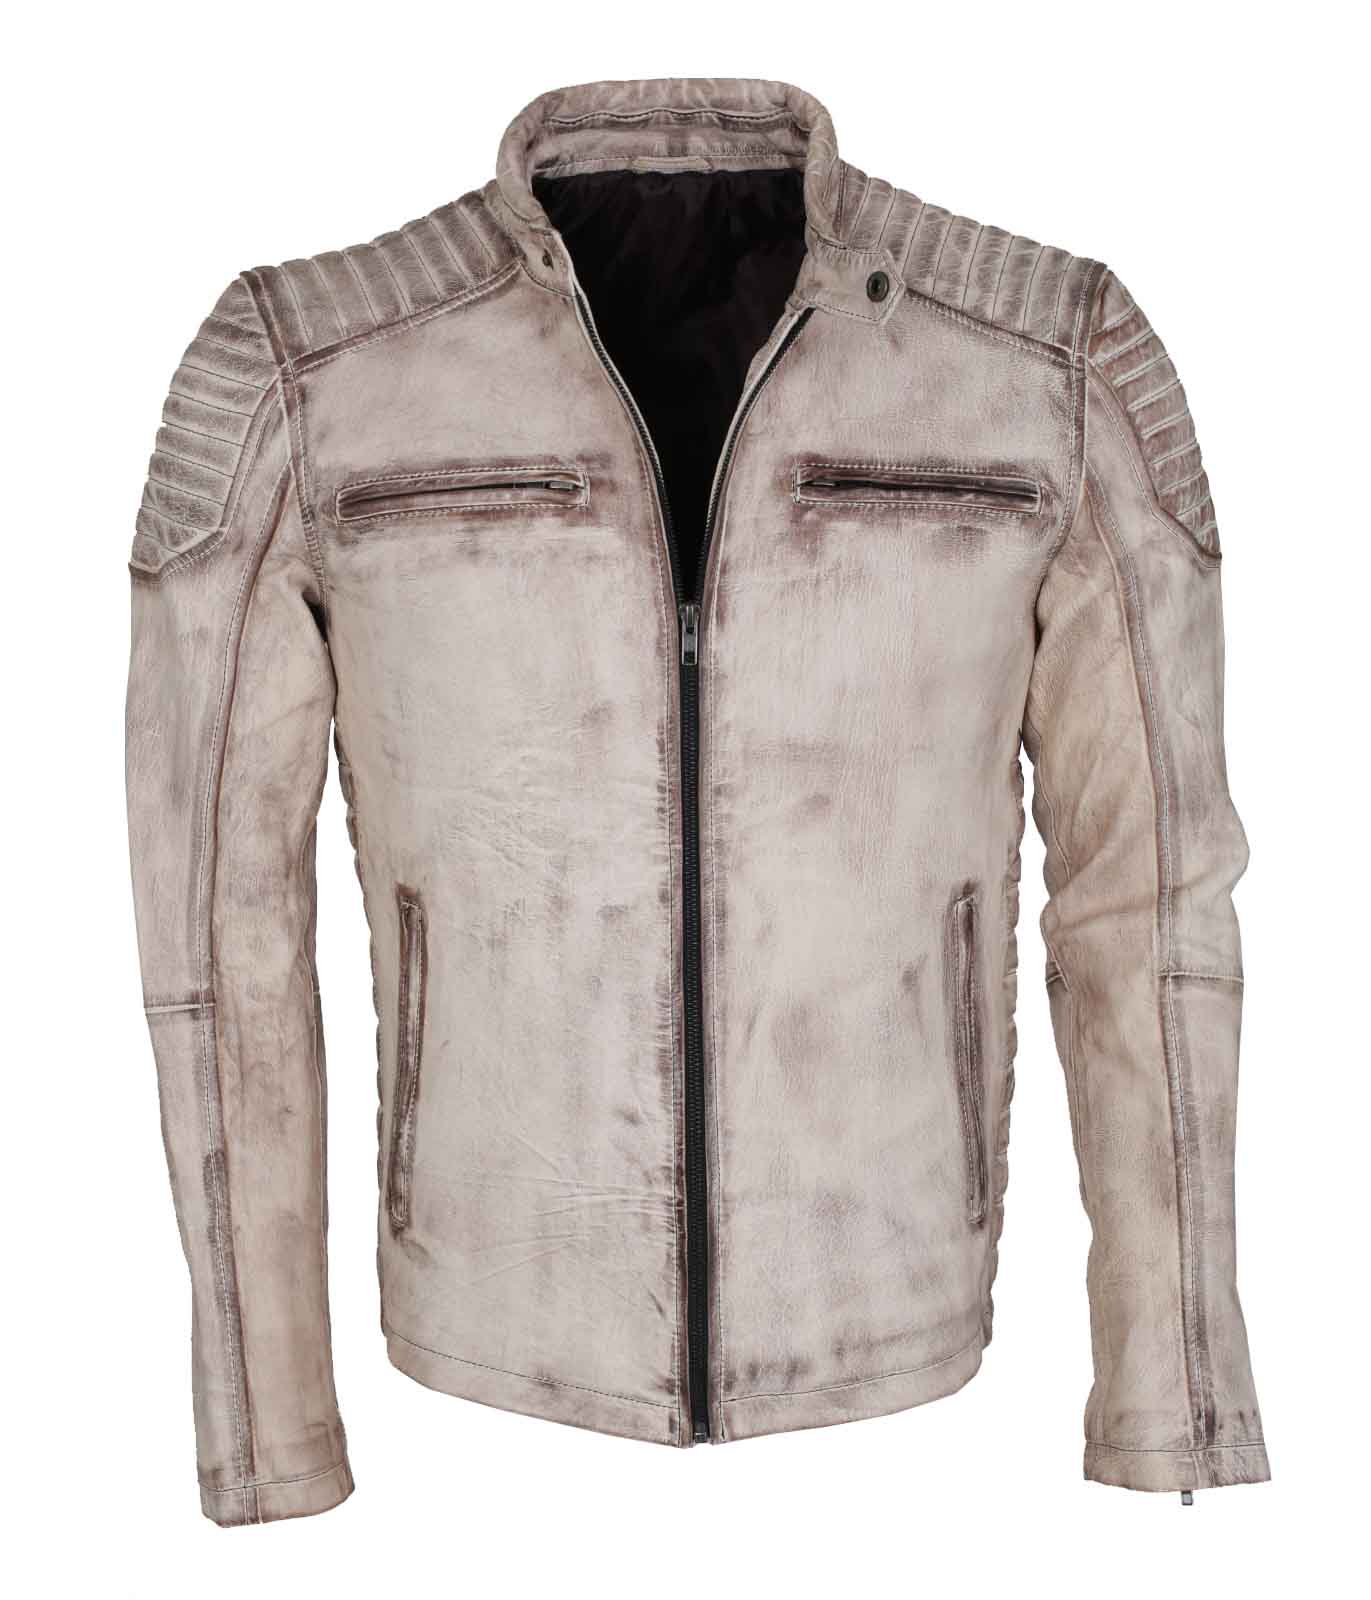 Buy Custom Punk Leather Jacket Decoys For Convenient Hunting - Alibaba.com-thanhphatduhoc.com.vn